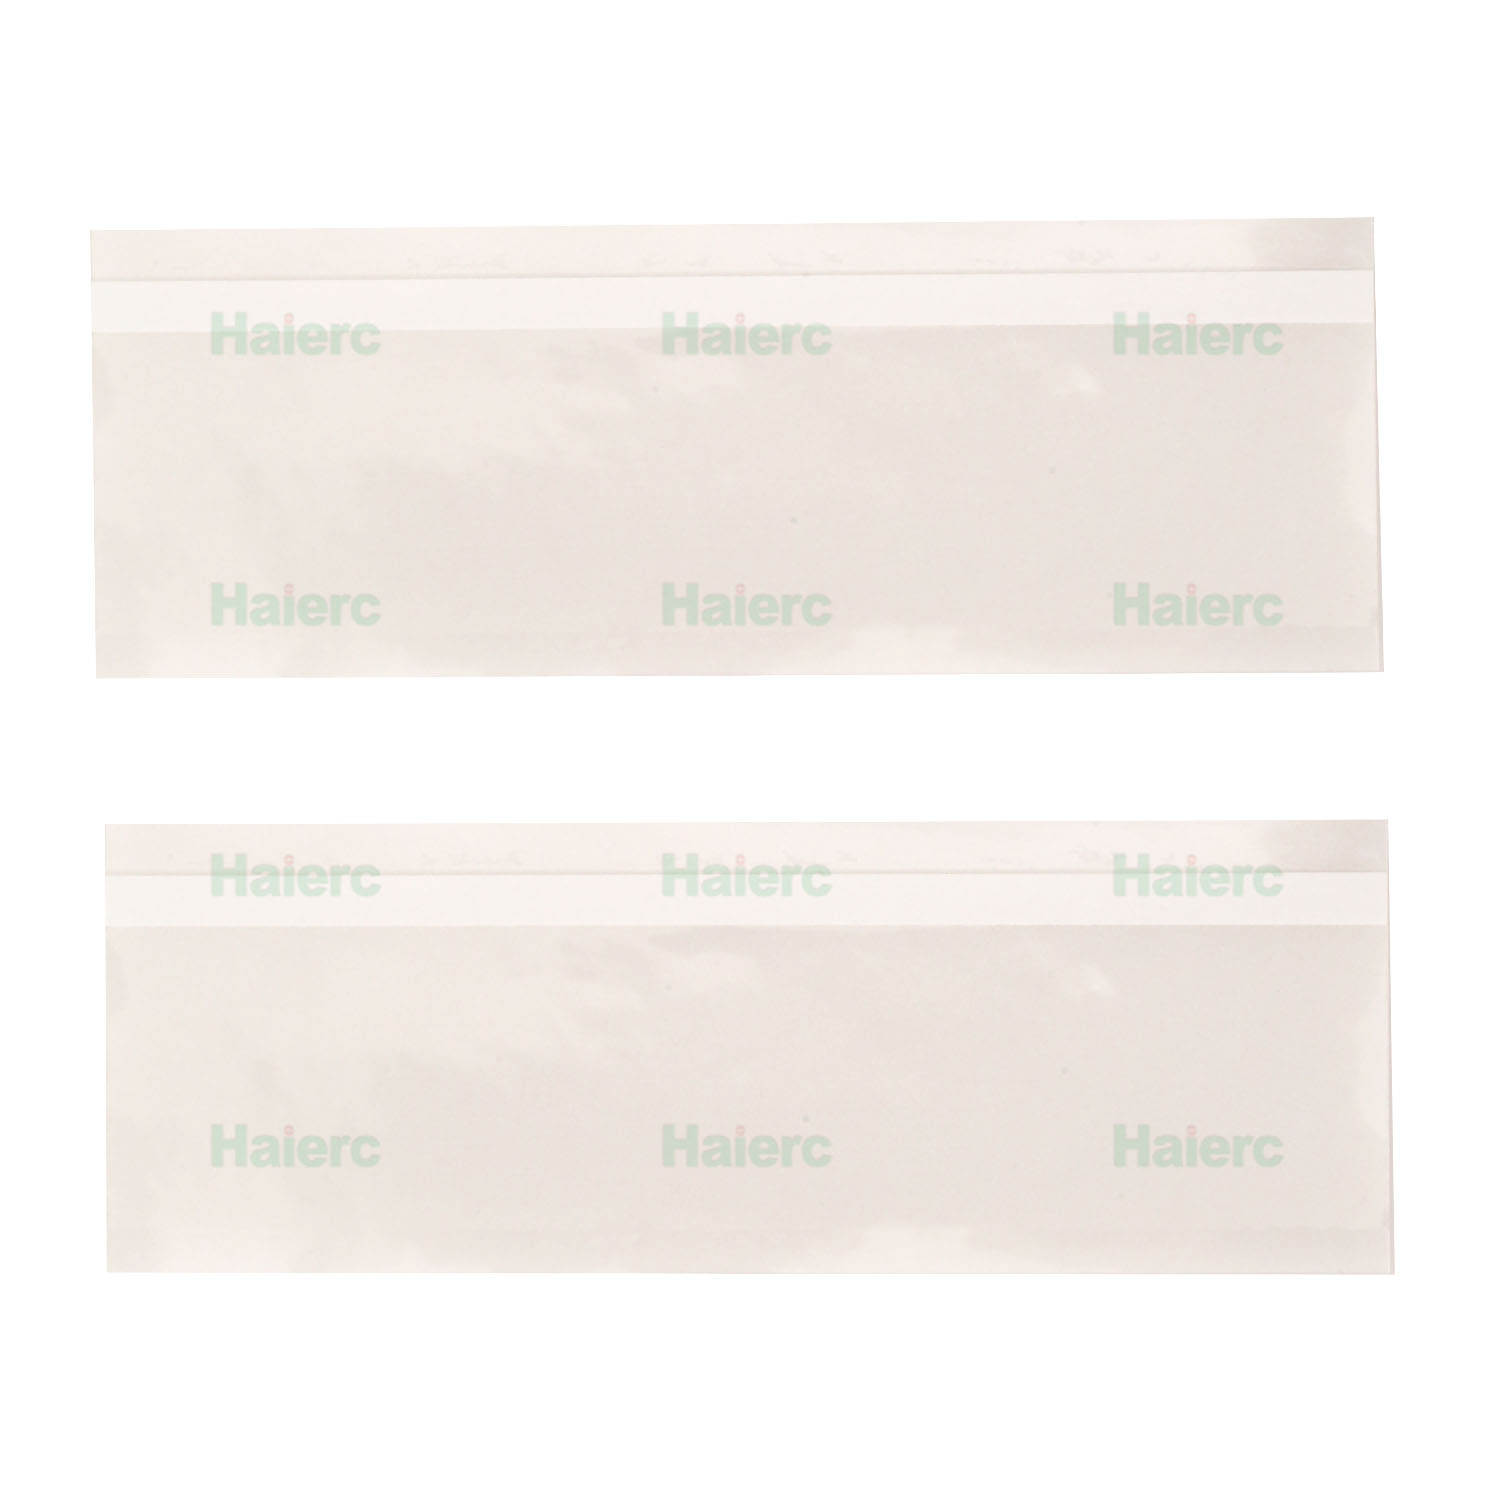 Haierc Window Sticker Fruit Fly Glue Traps for Pest Control